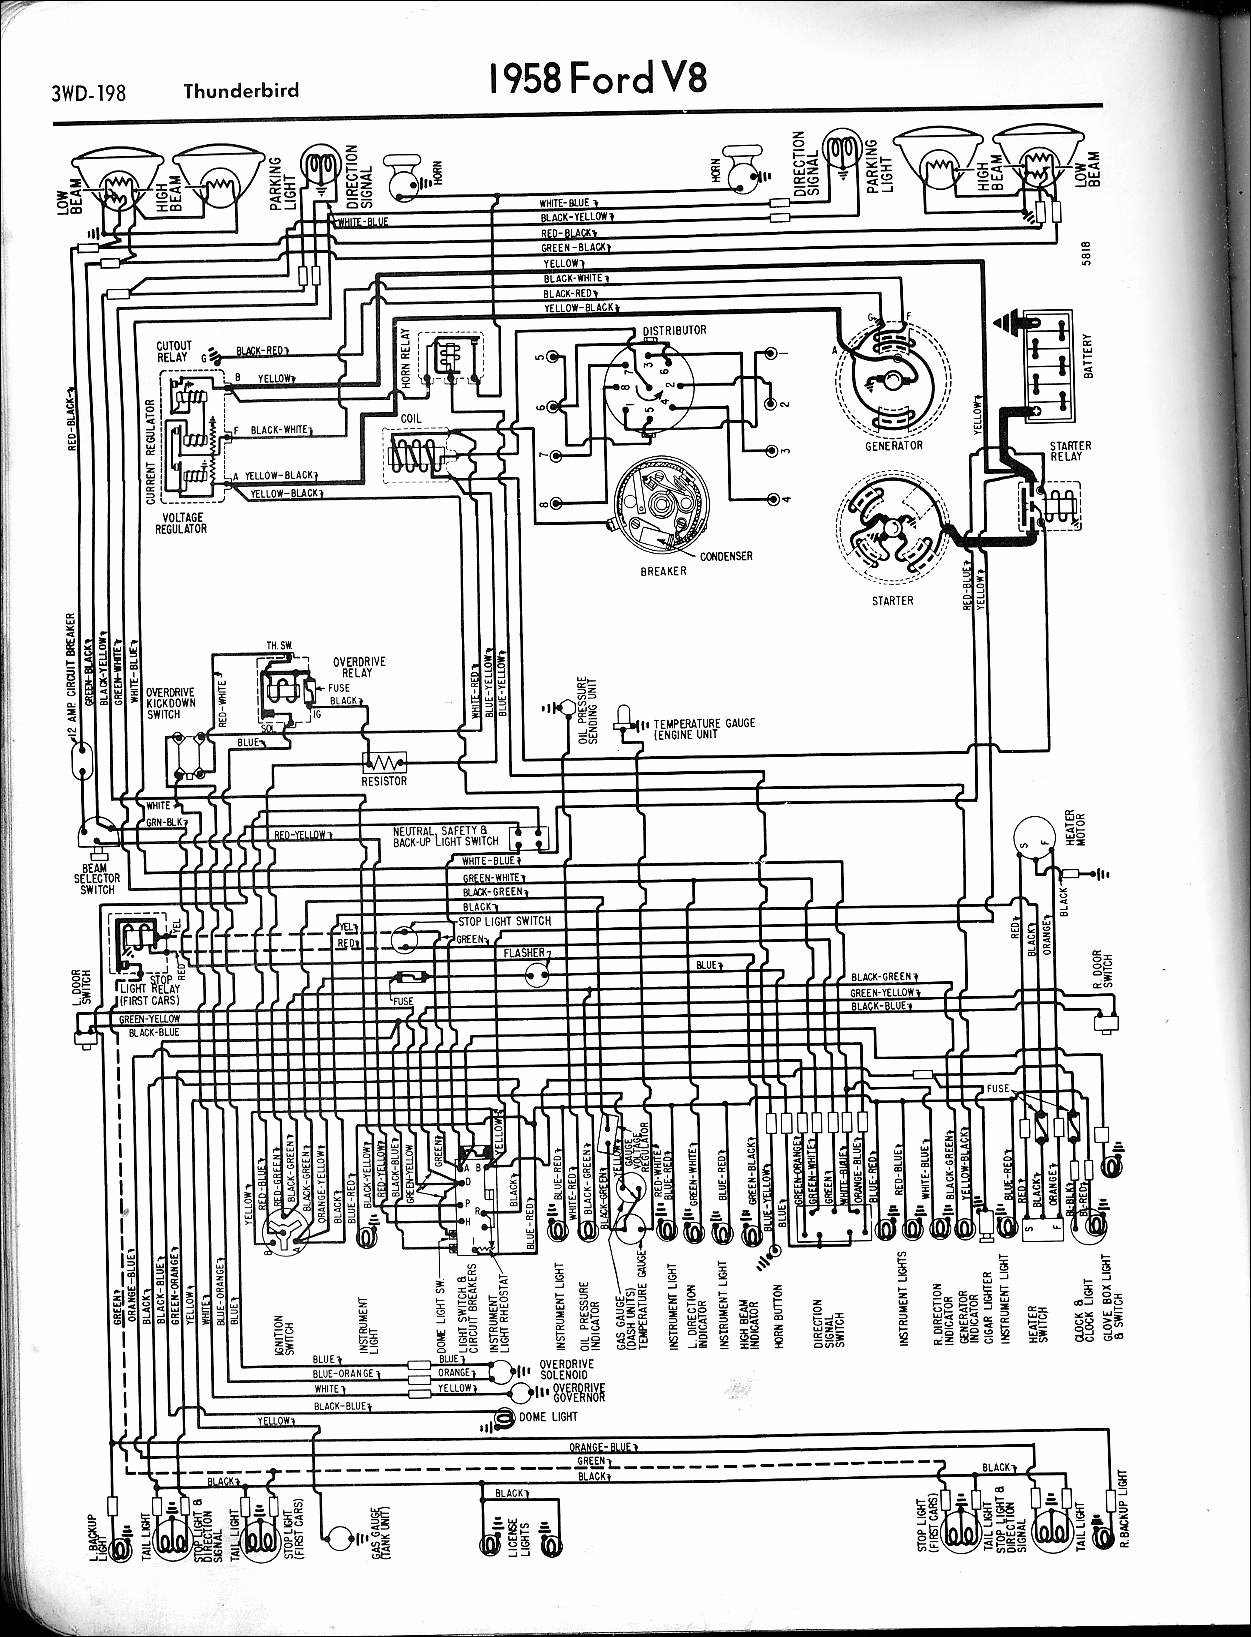 Kohler Voltage Regulator Wiring Diagram | Wiring Diagram - Kohler Voltage Regulator Wiring Diagram